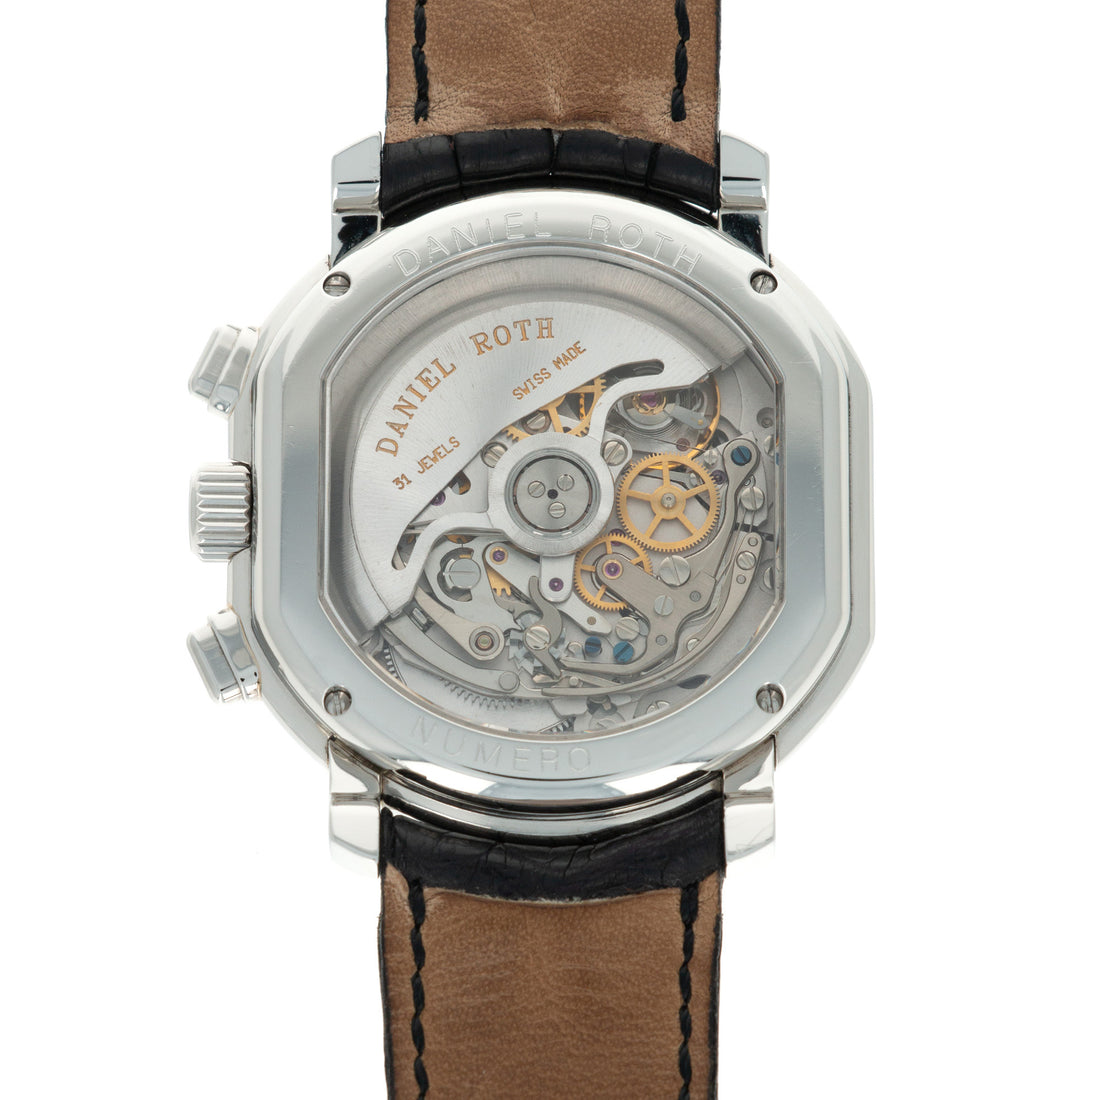 Daniel Roth Steel Automatic Chronograph Watch